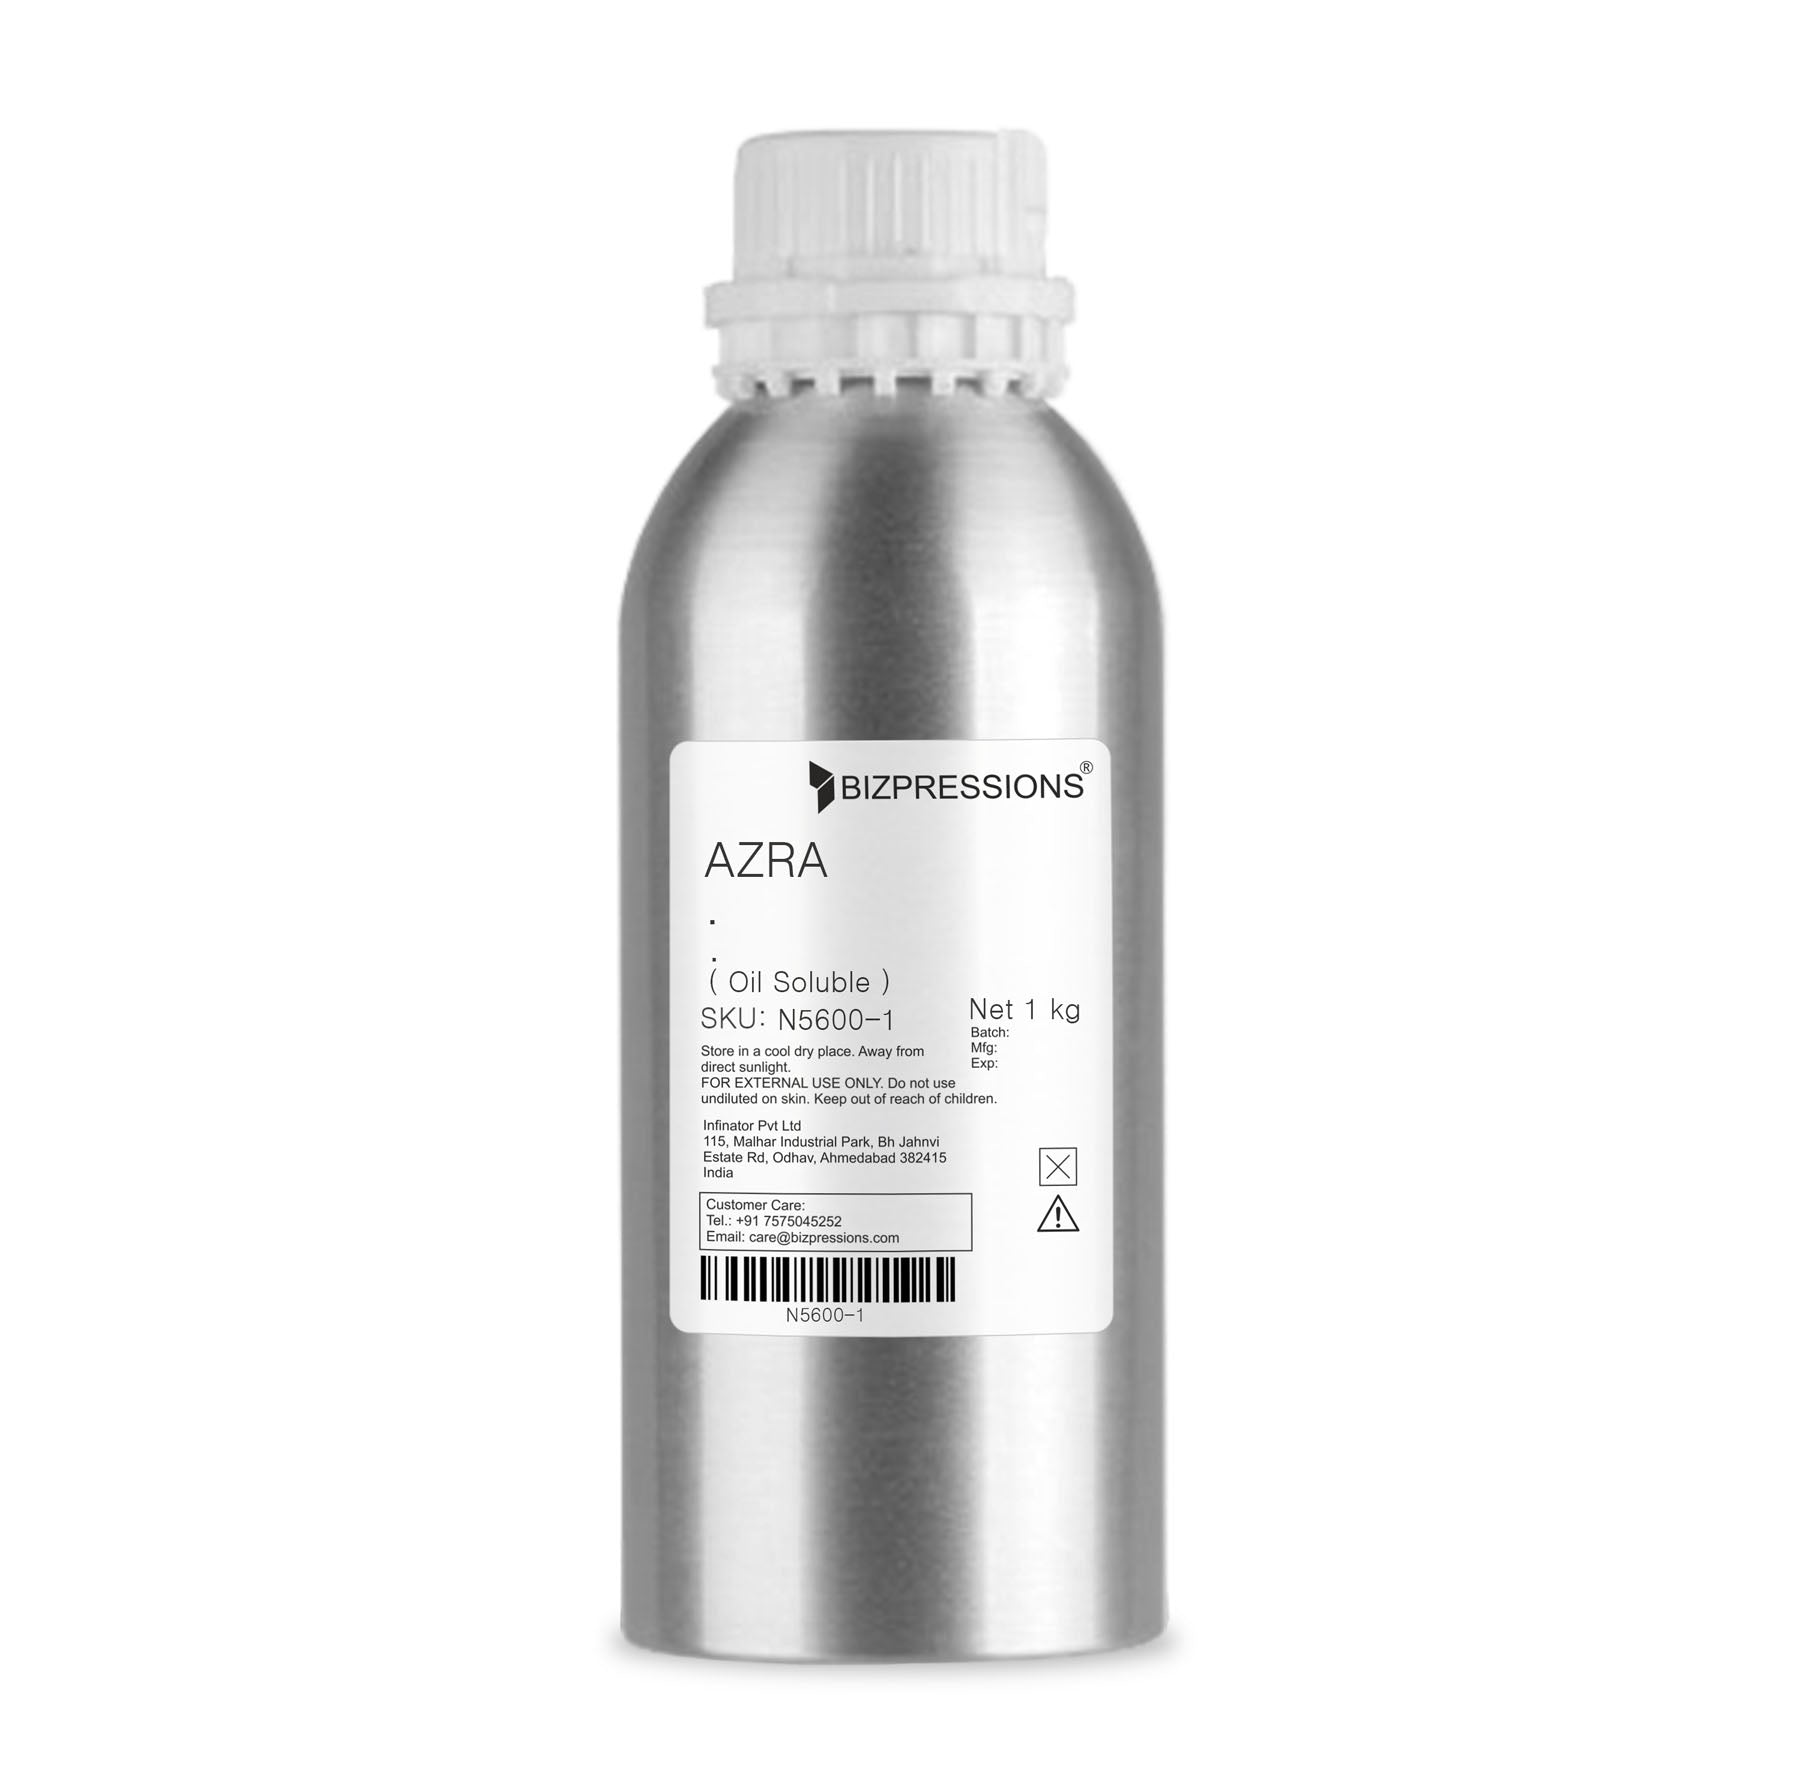 AZRA - Fragrance ( Oil Soluble ) - 1 kg